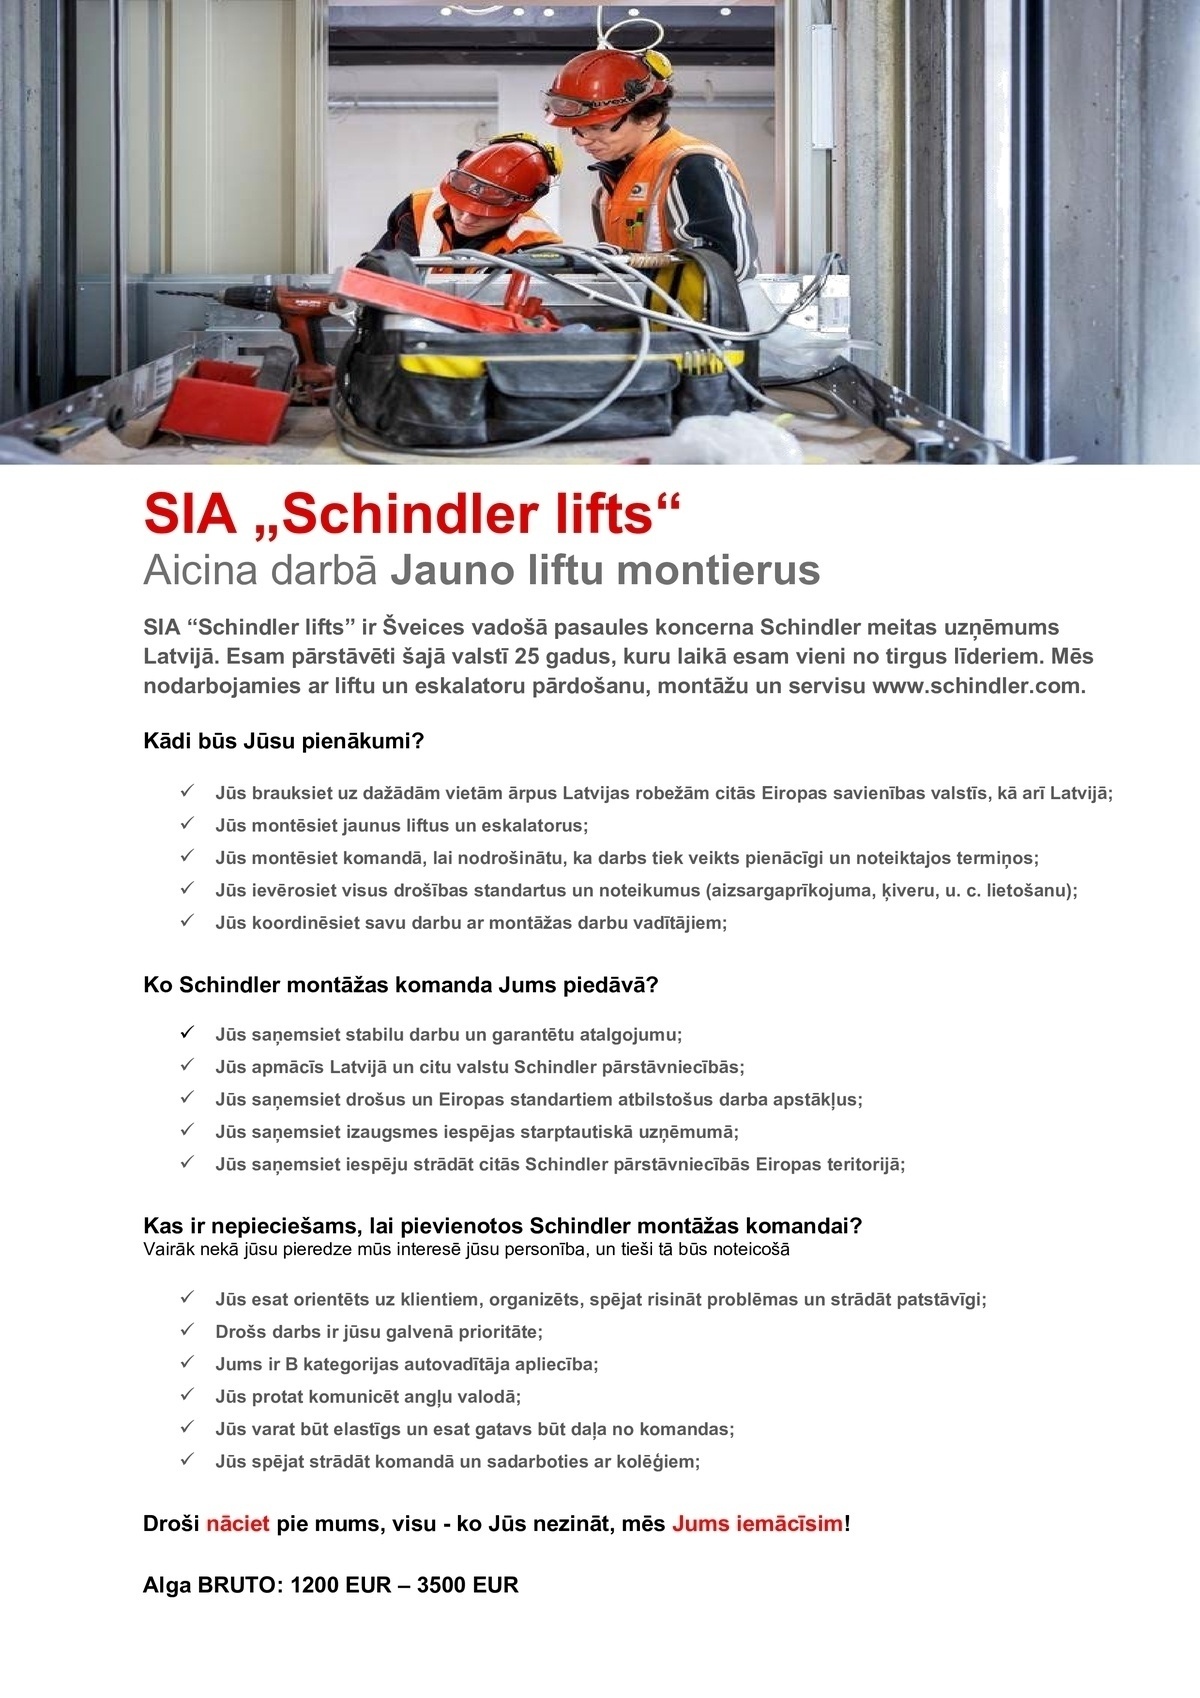 Schindler lifts, SIA Jauno liftu montieri/-es